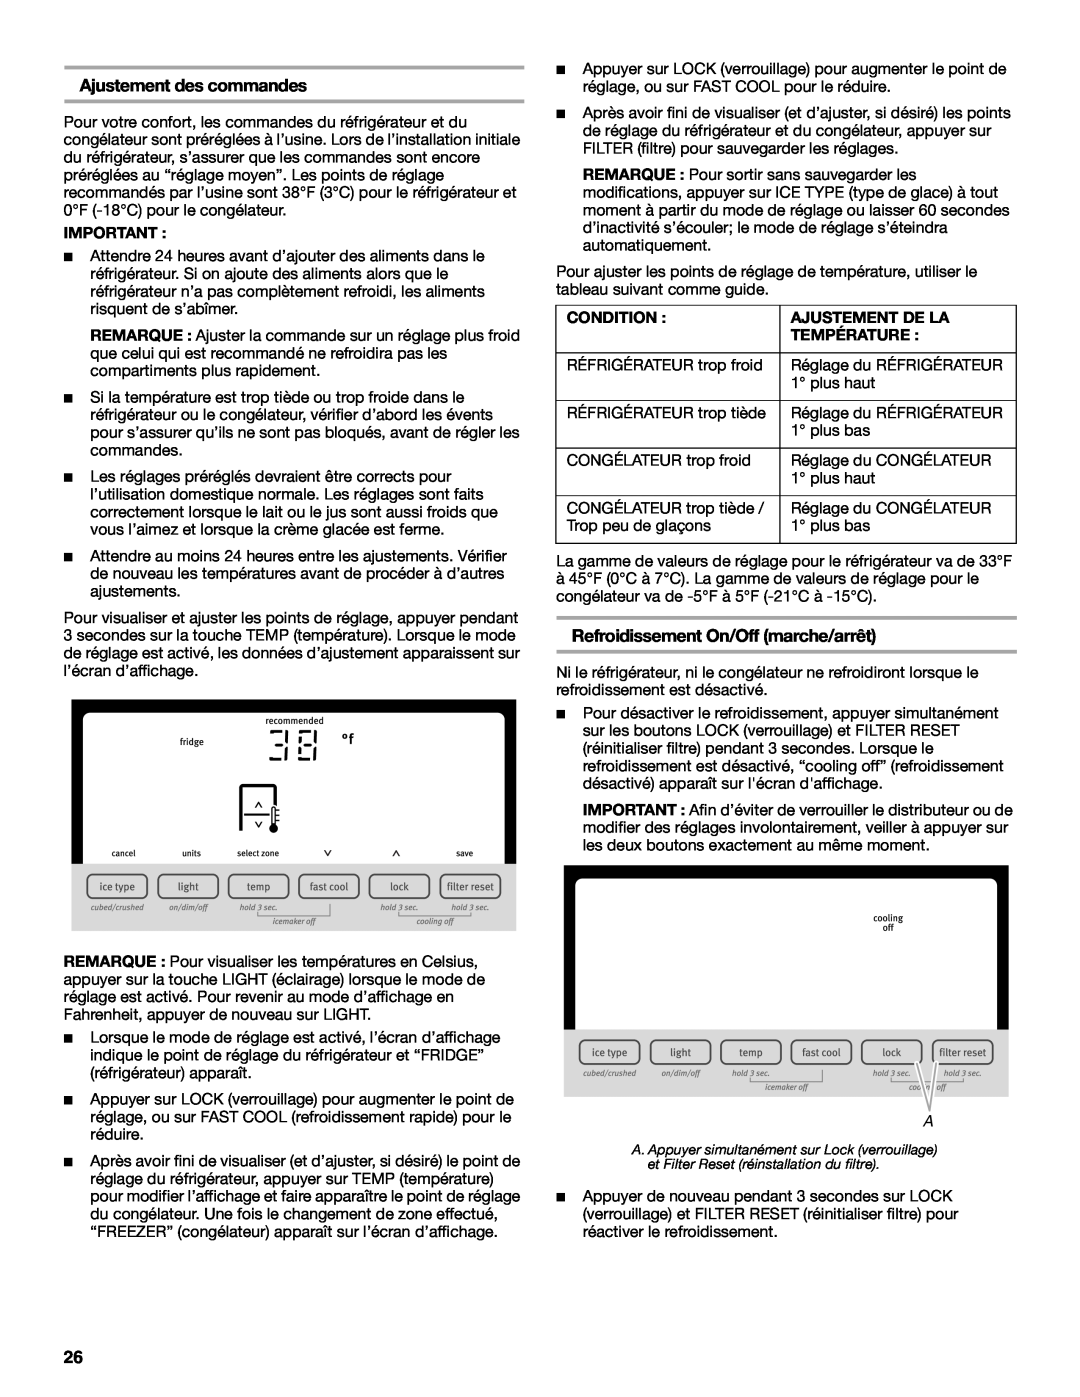 Maytag UKF8001AXX-200 installation instructions Ajustement des commandes, Refroidissement On/Off marche/arrêt 